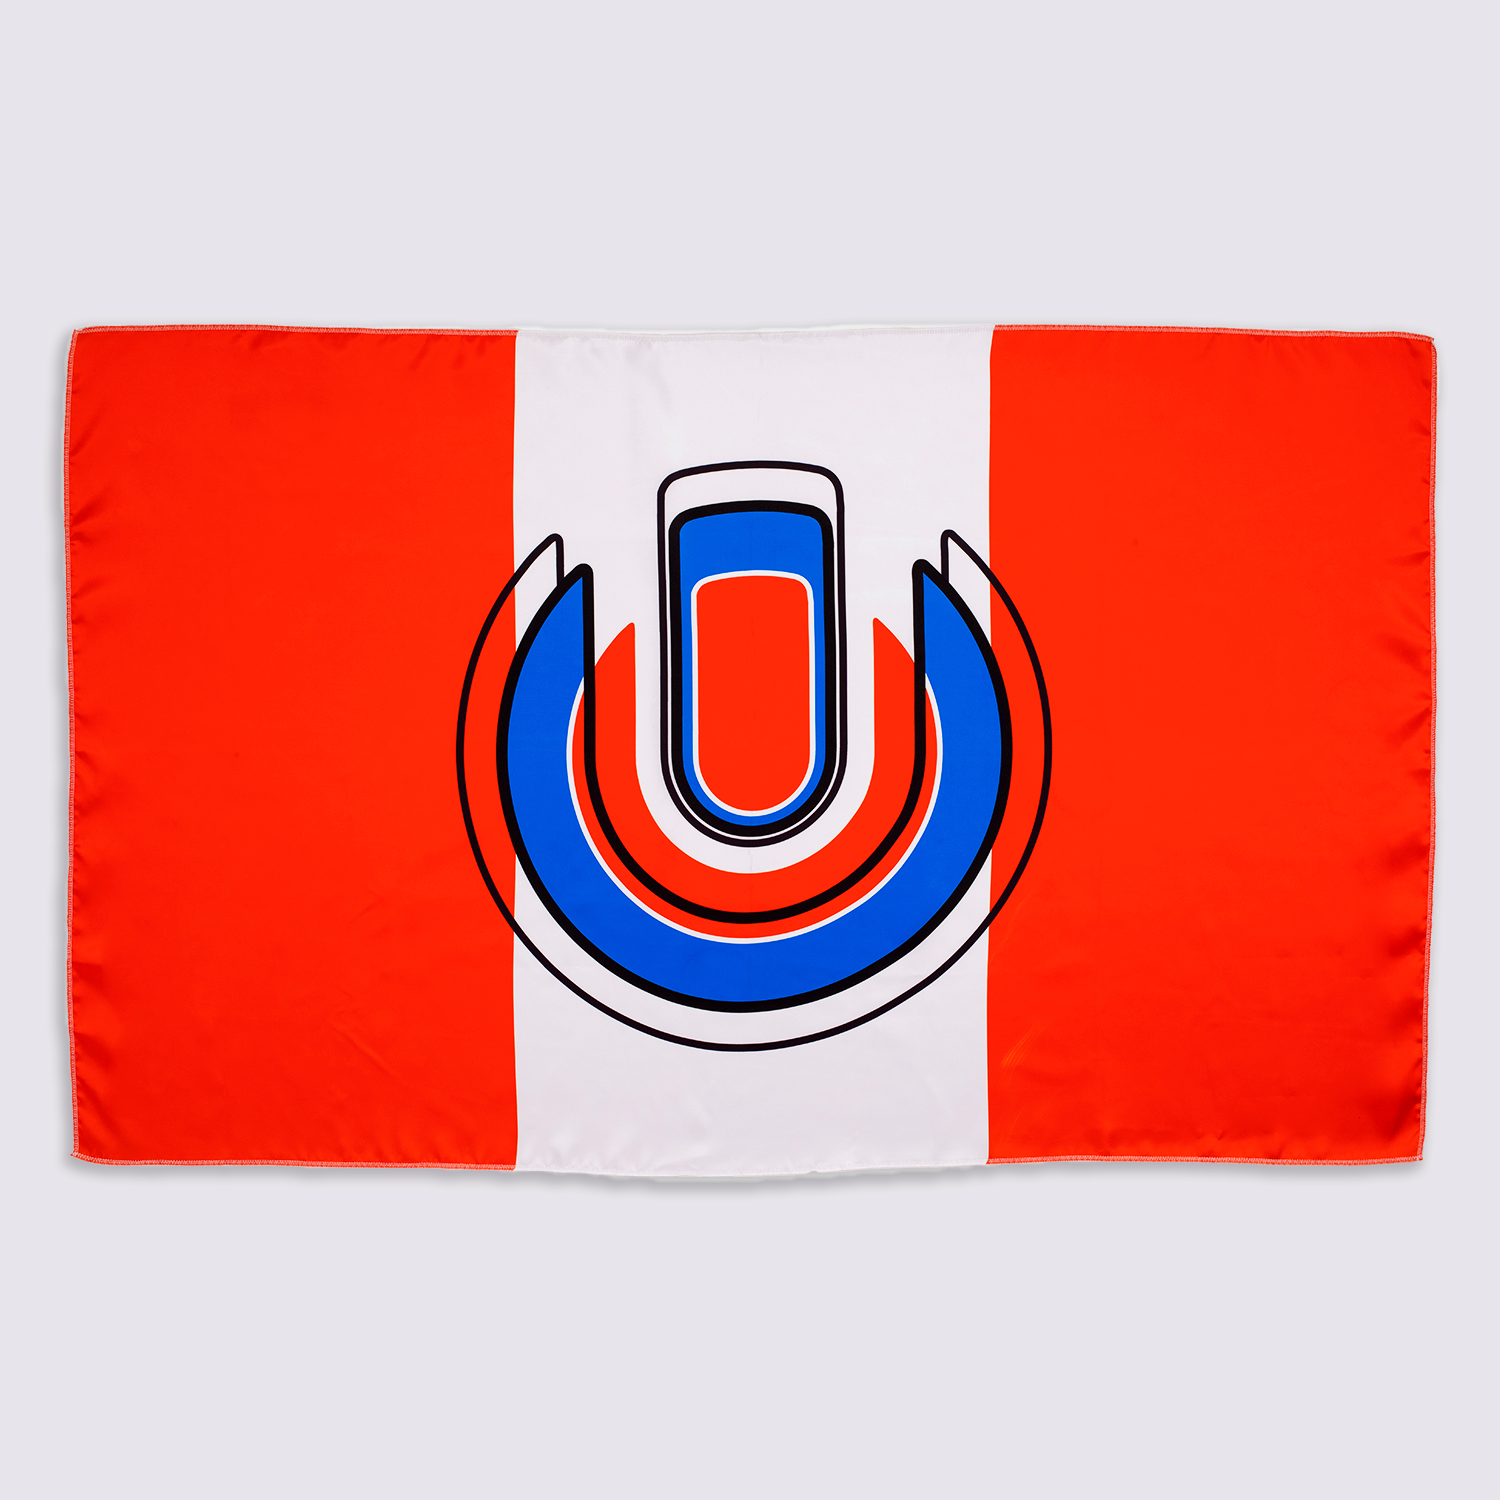 Bandera ultra oficial